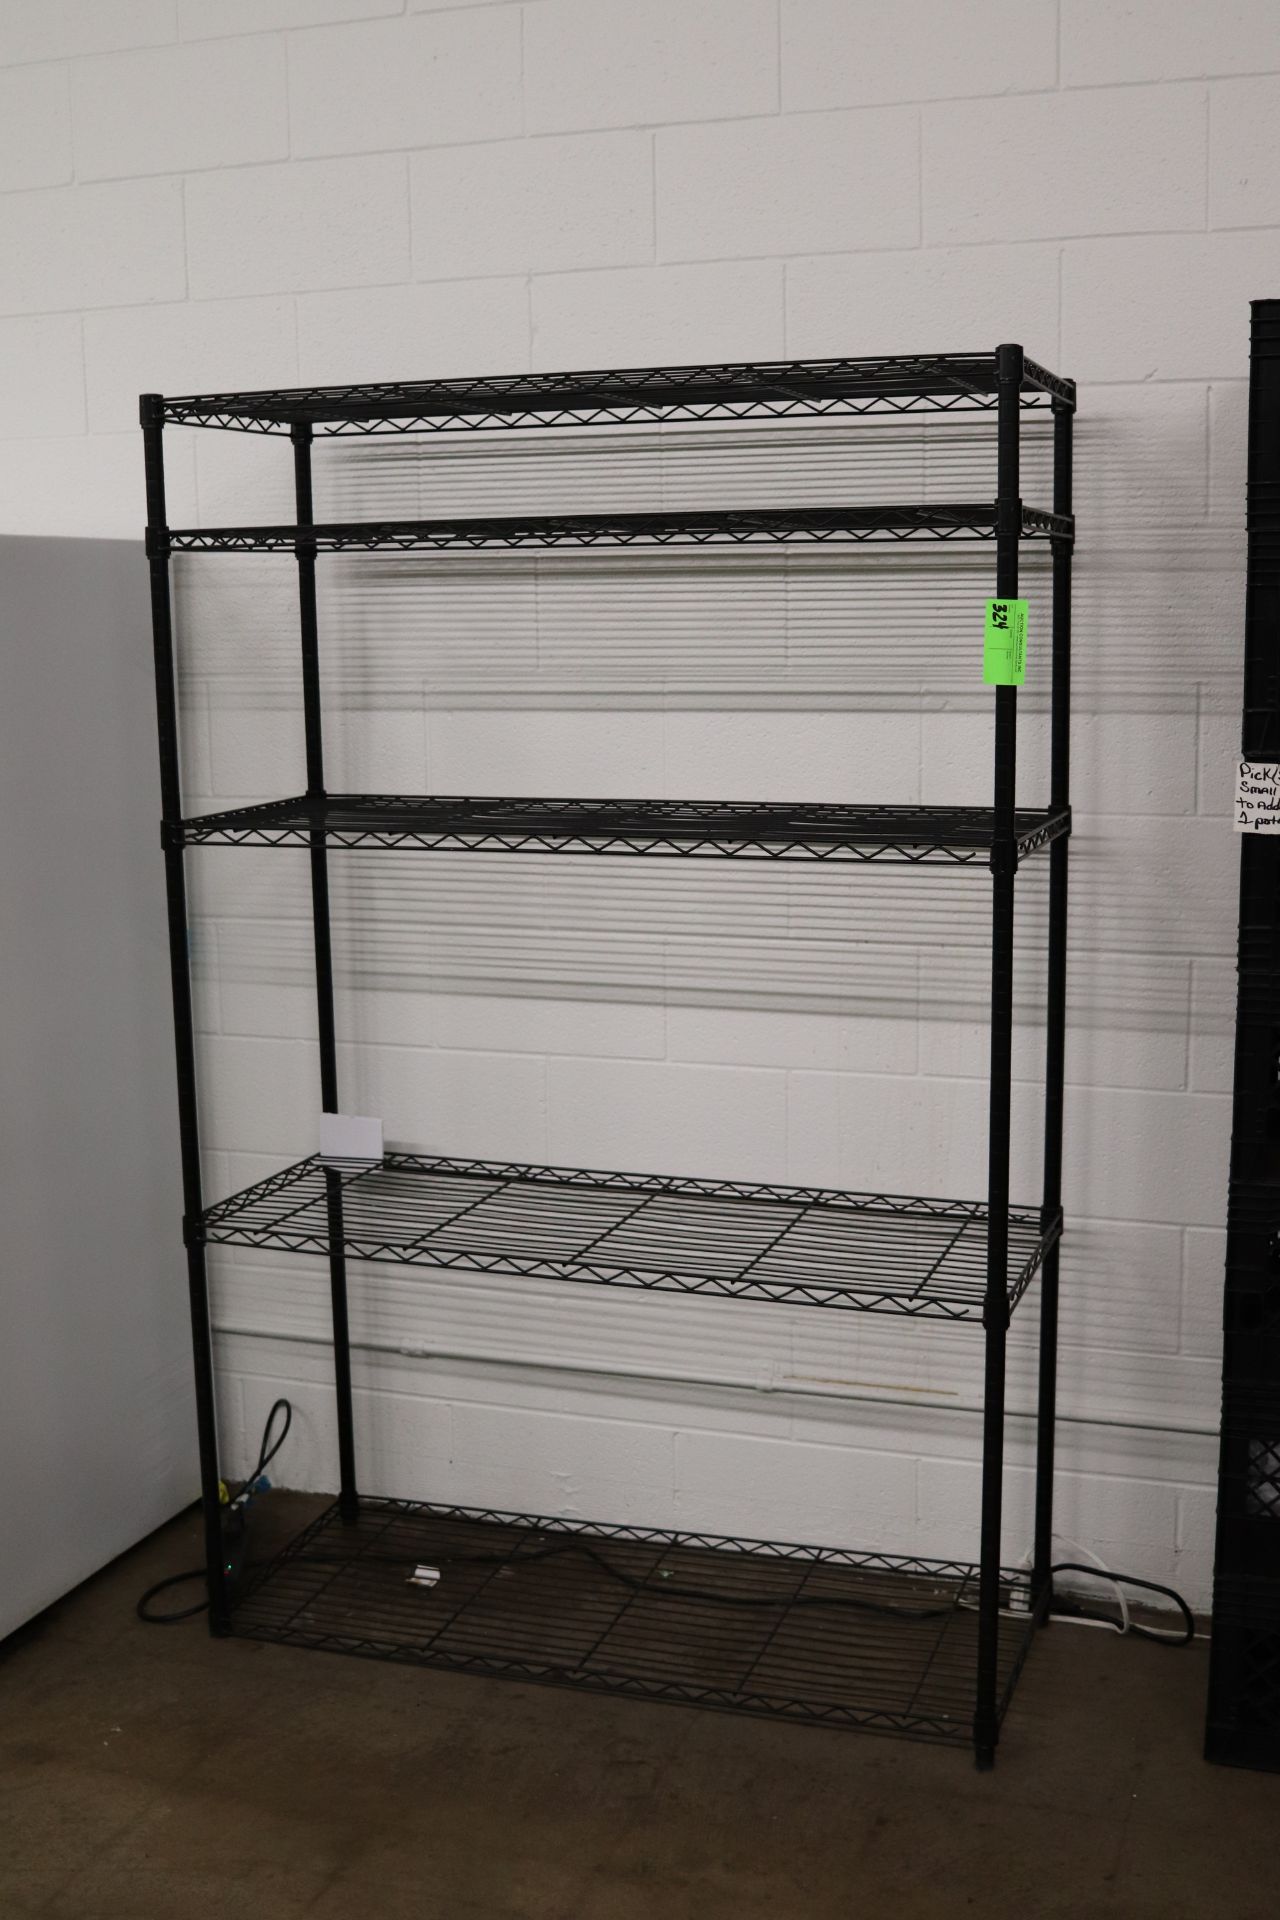 Storage shelf